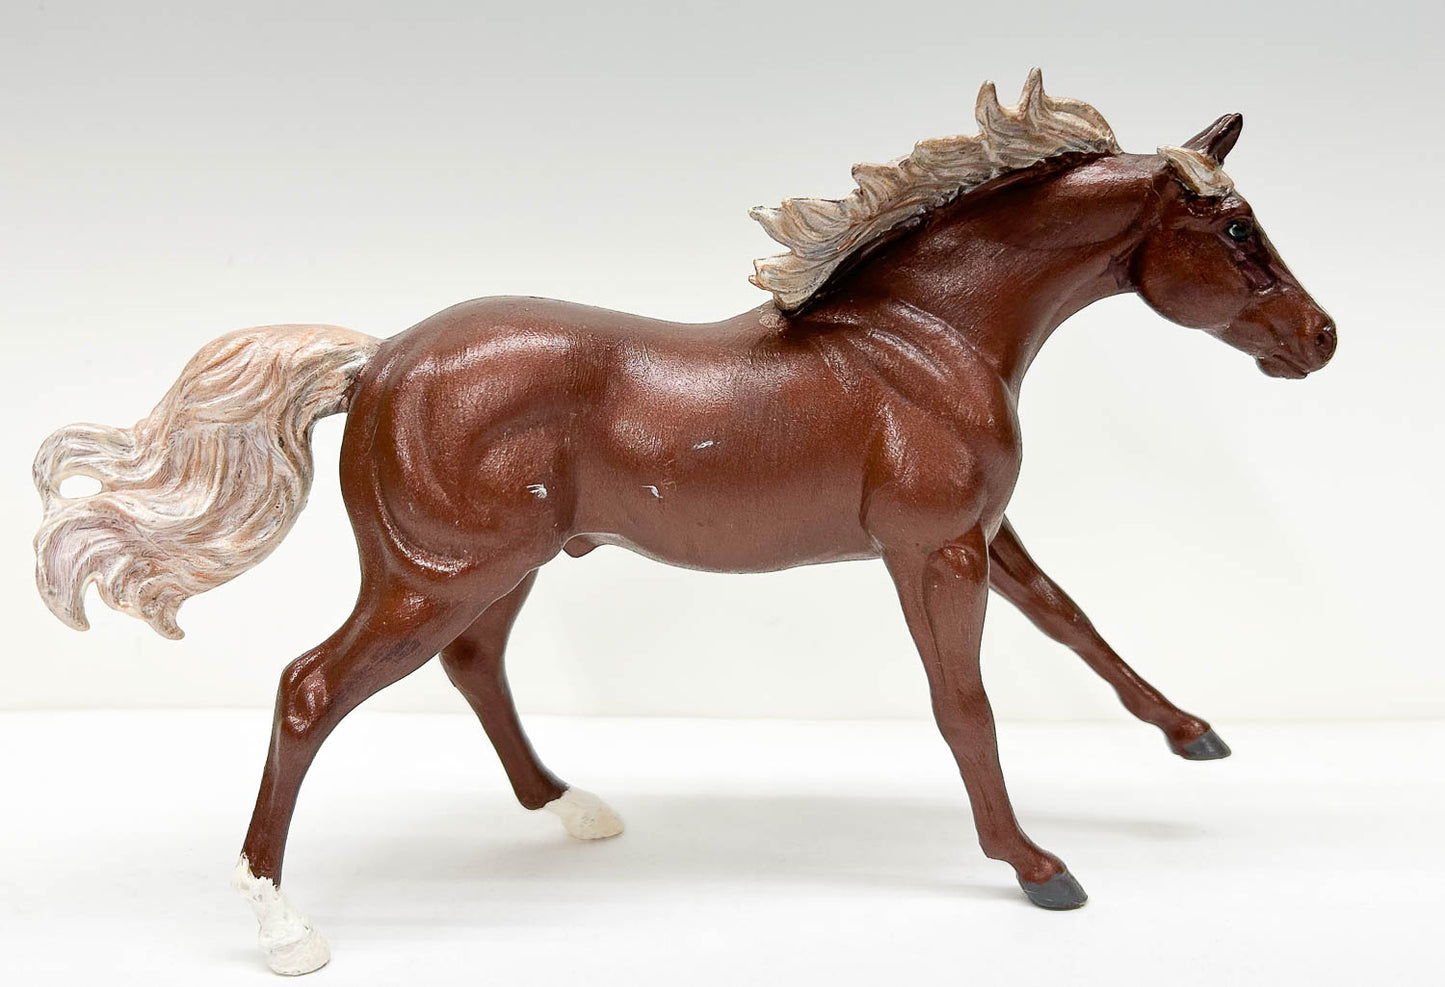 American Quarter Horse Stallion, Liver Chestnut - Body Previously Customized